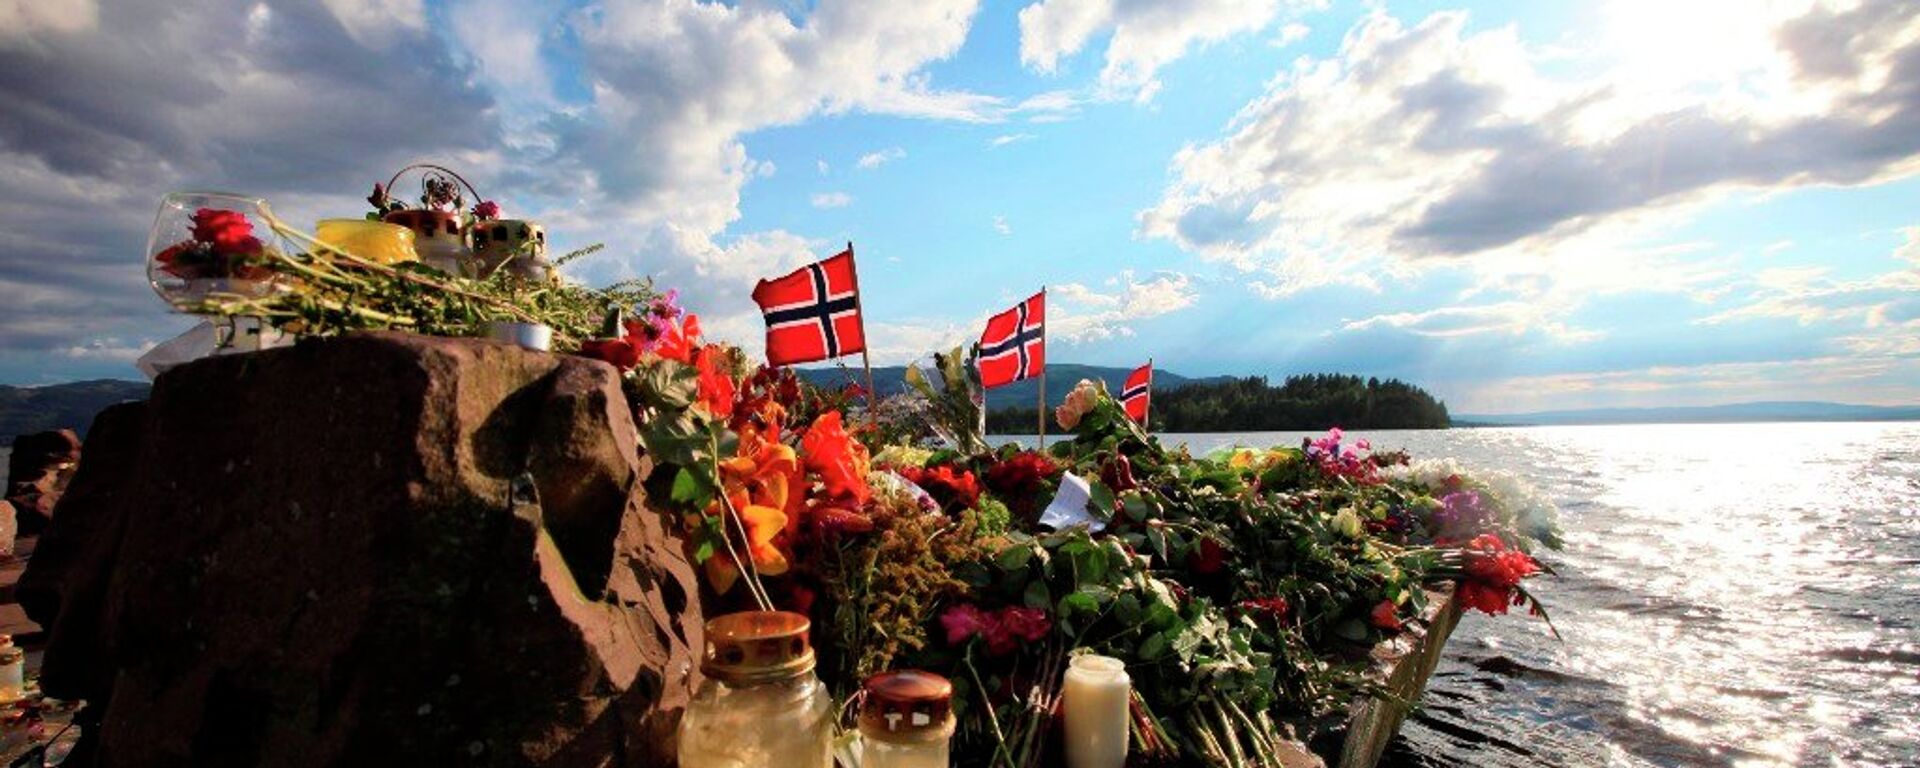 Norwegian flags and flowers are seen in Sundvollen, close to Utoya island, background, where gunman Anders Behring Breivik killed at least 68 people, near Oslo, Norway (Foto vom 28.07.11).  - Sputnik International, 1920, 21.07.2021